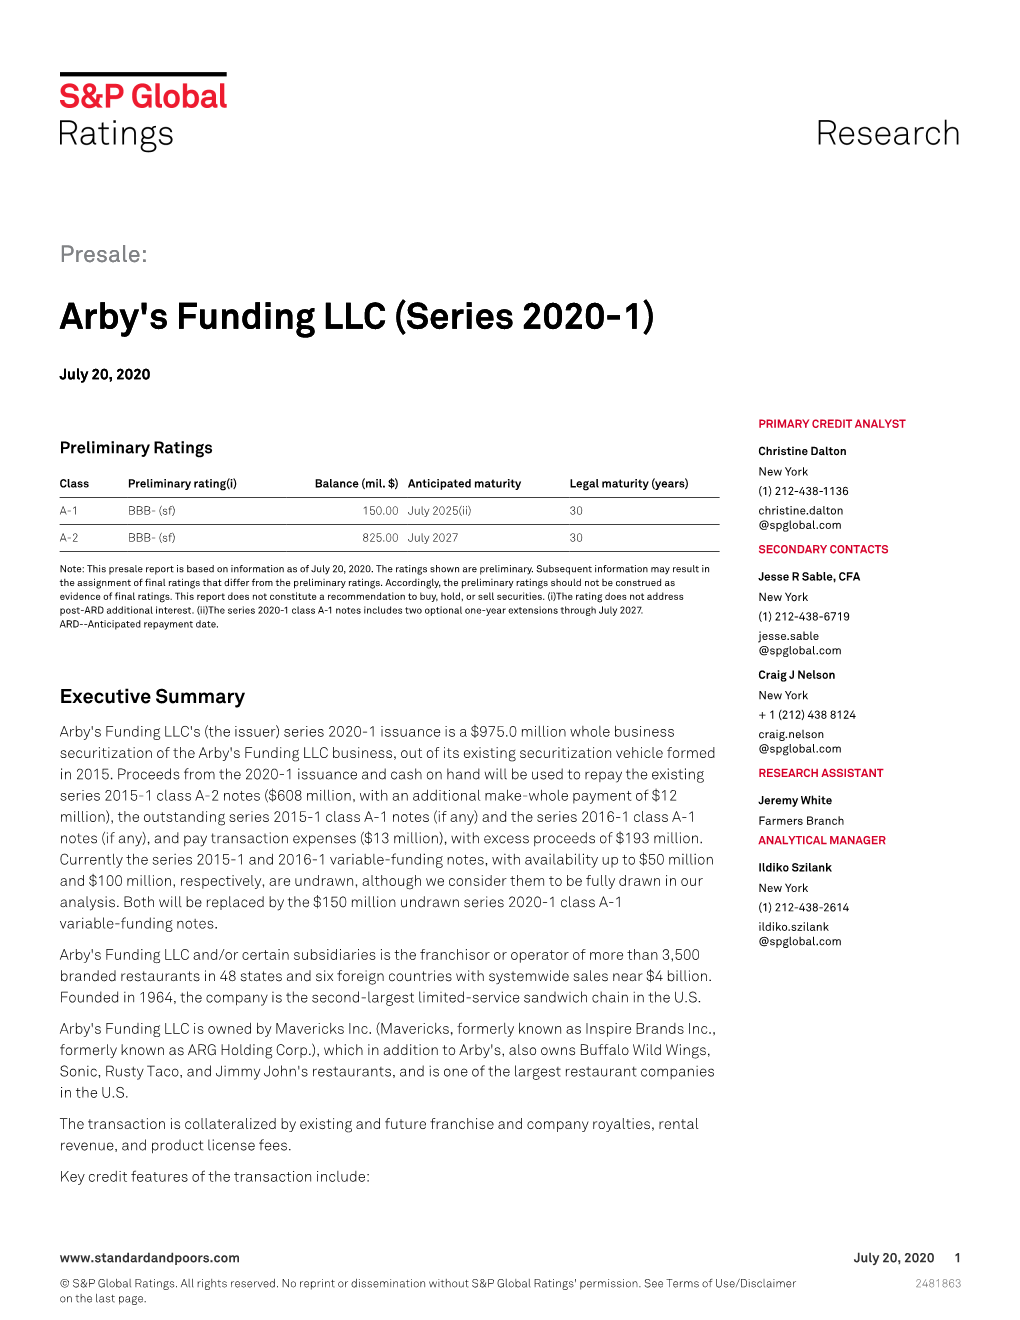 Arby's Funding LLC (Series 2020-1)